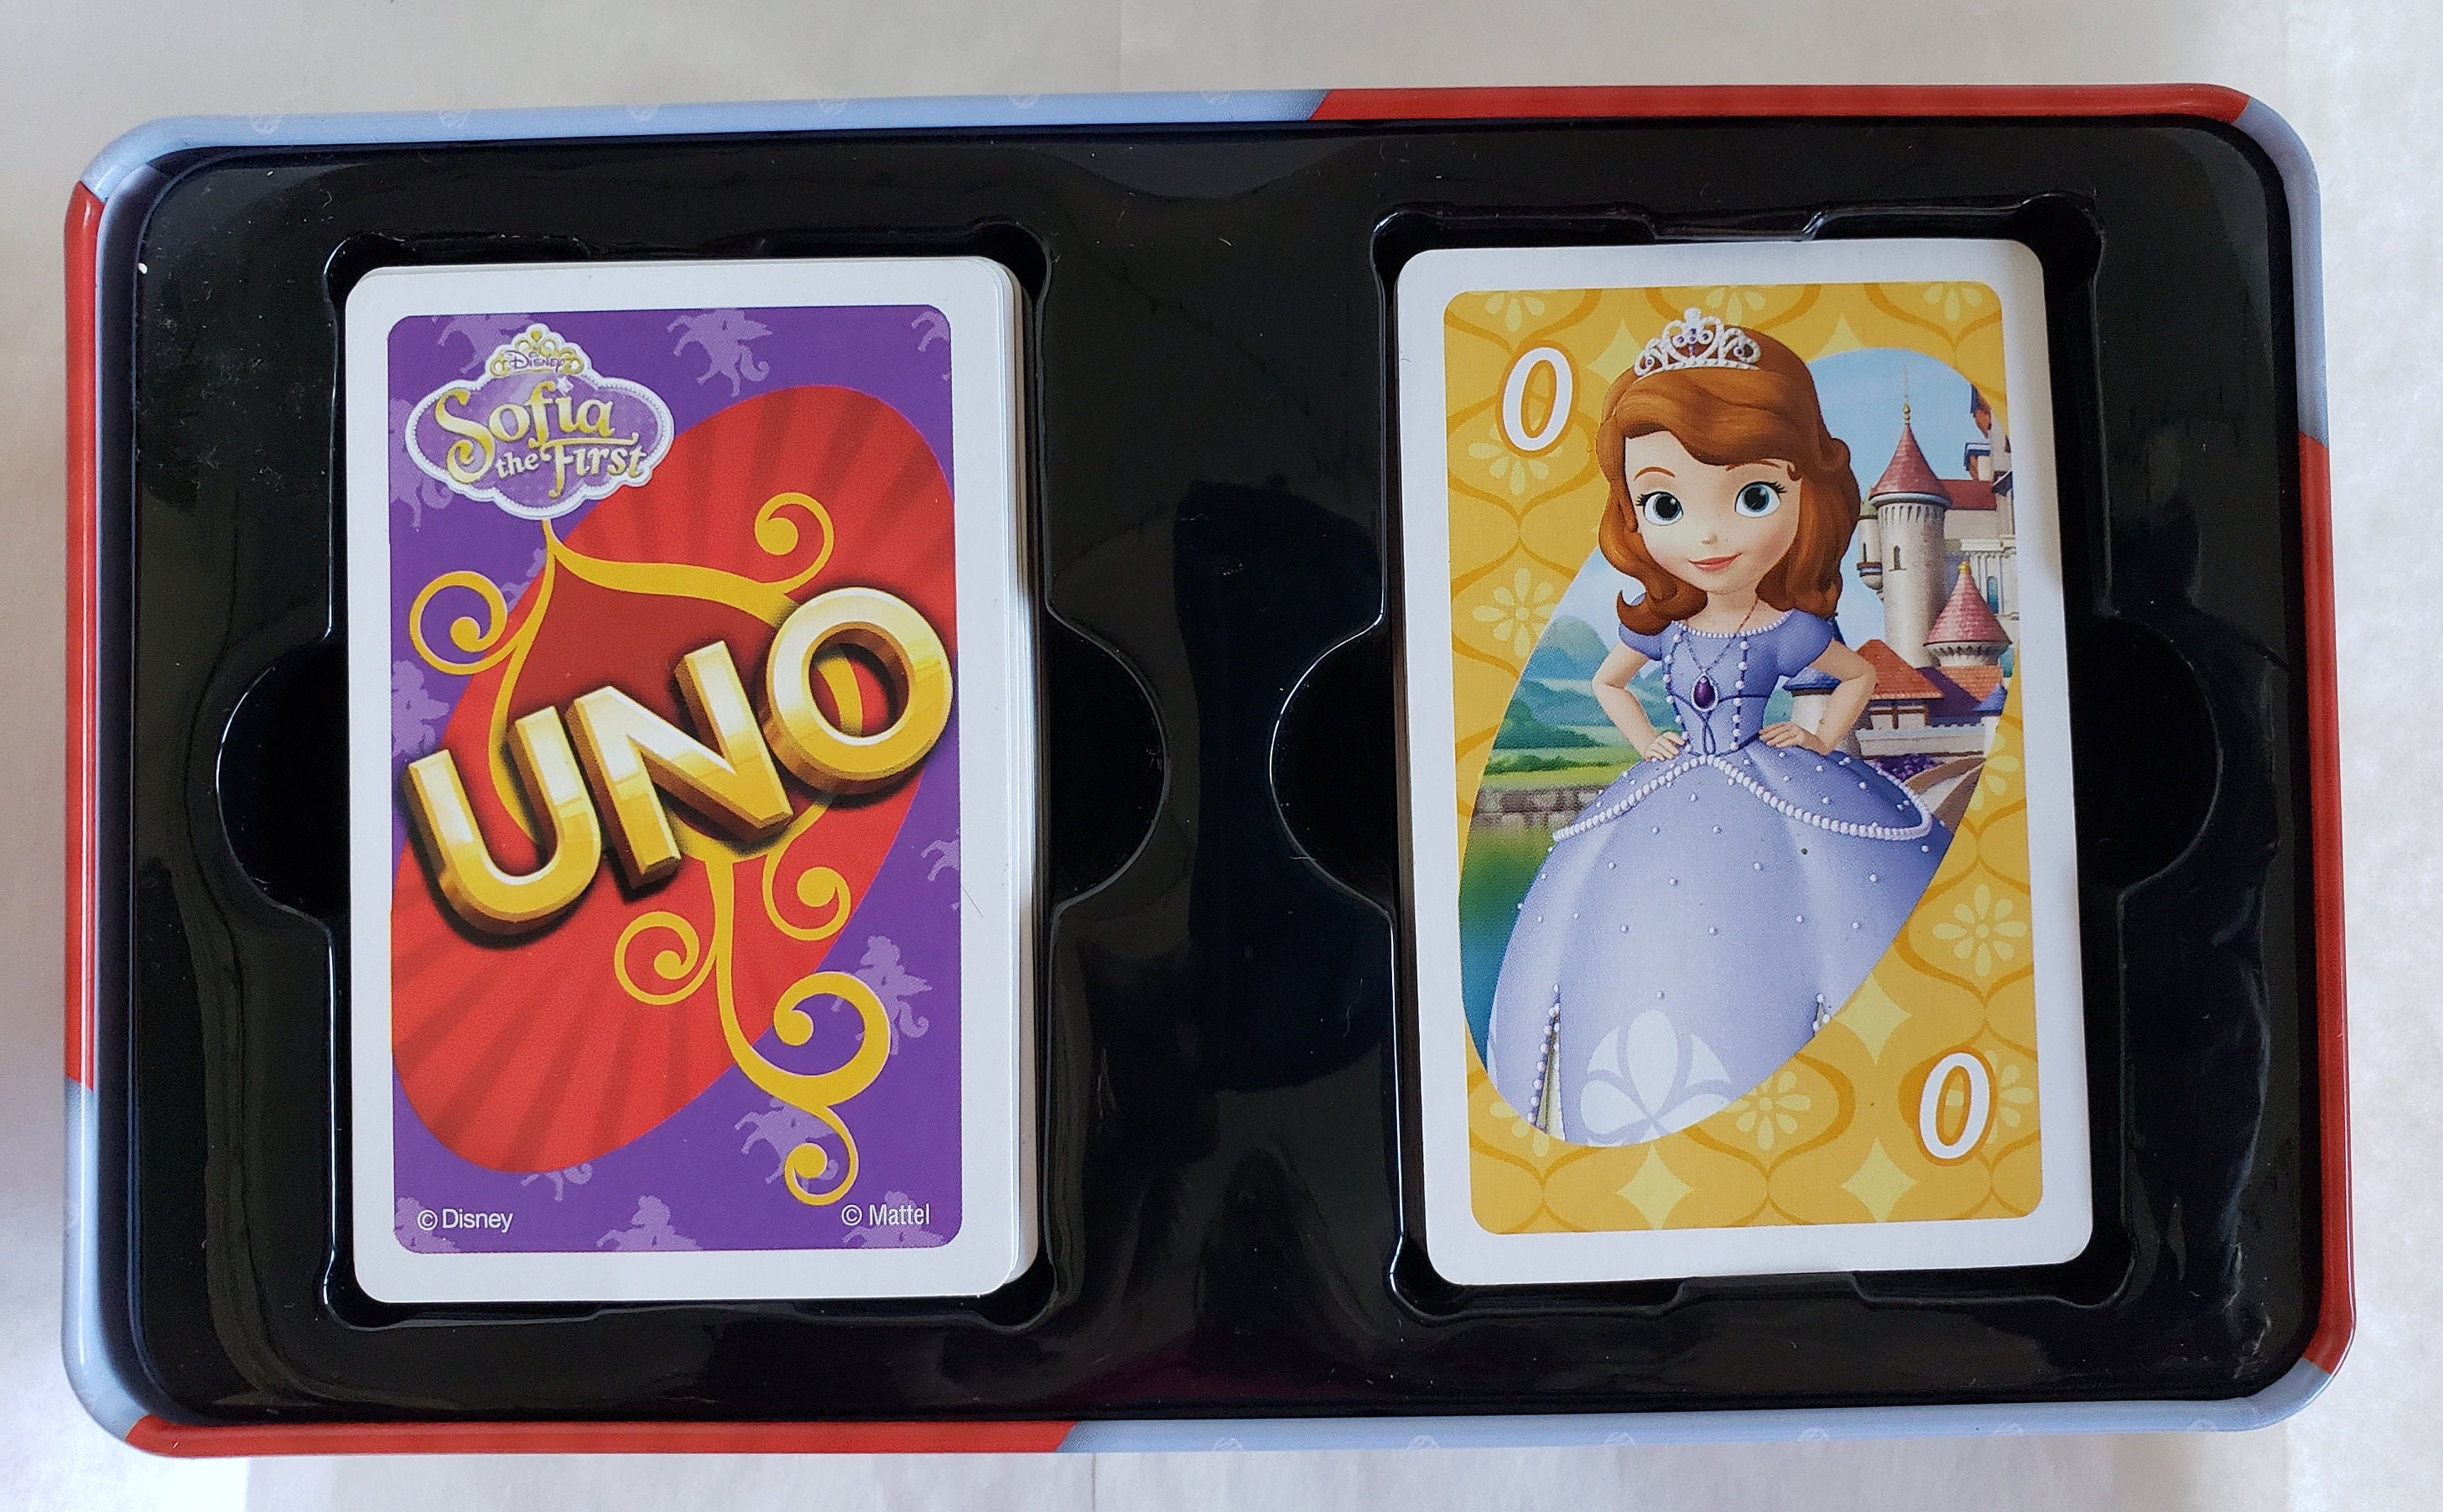 UNO Card Game - Disney Princess